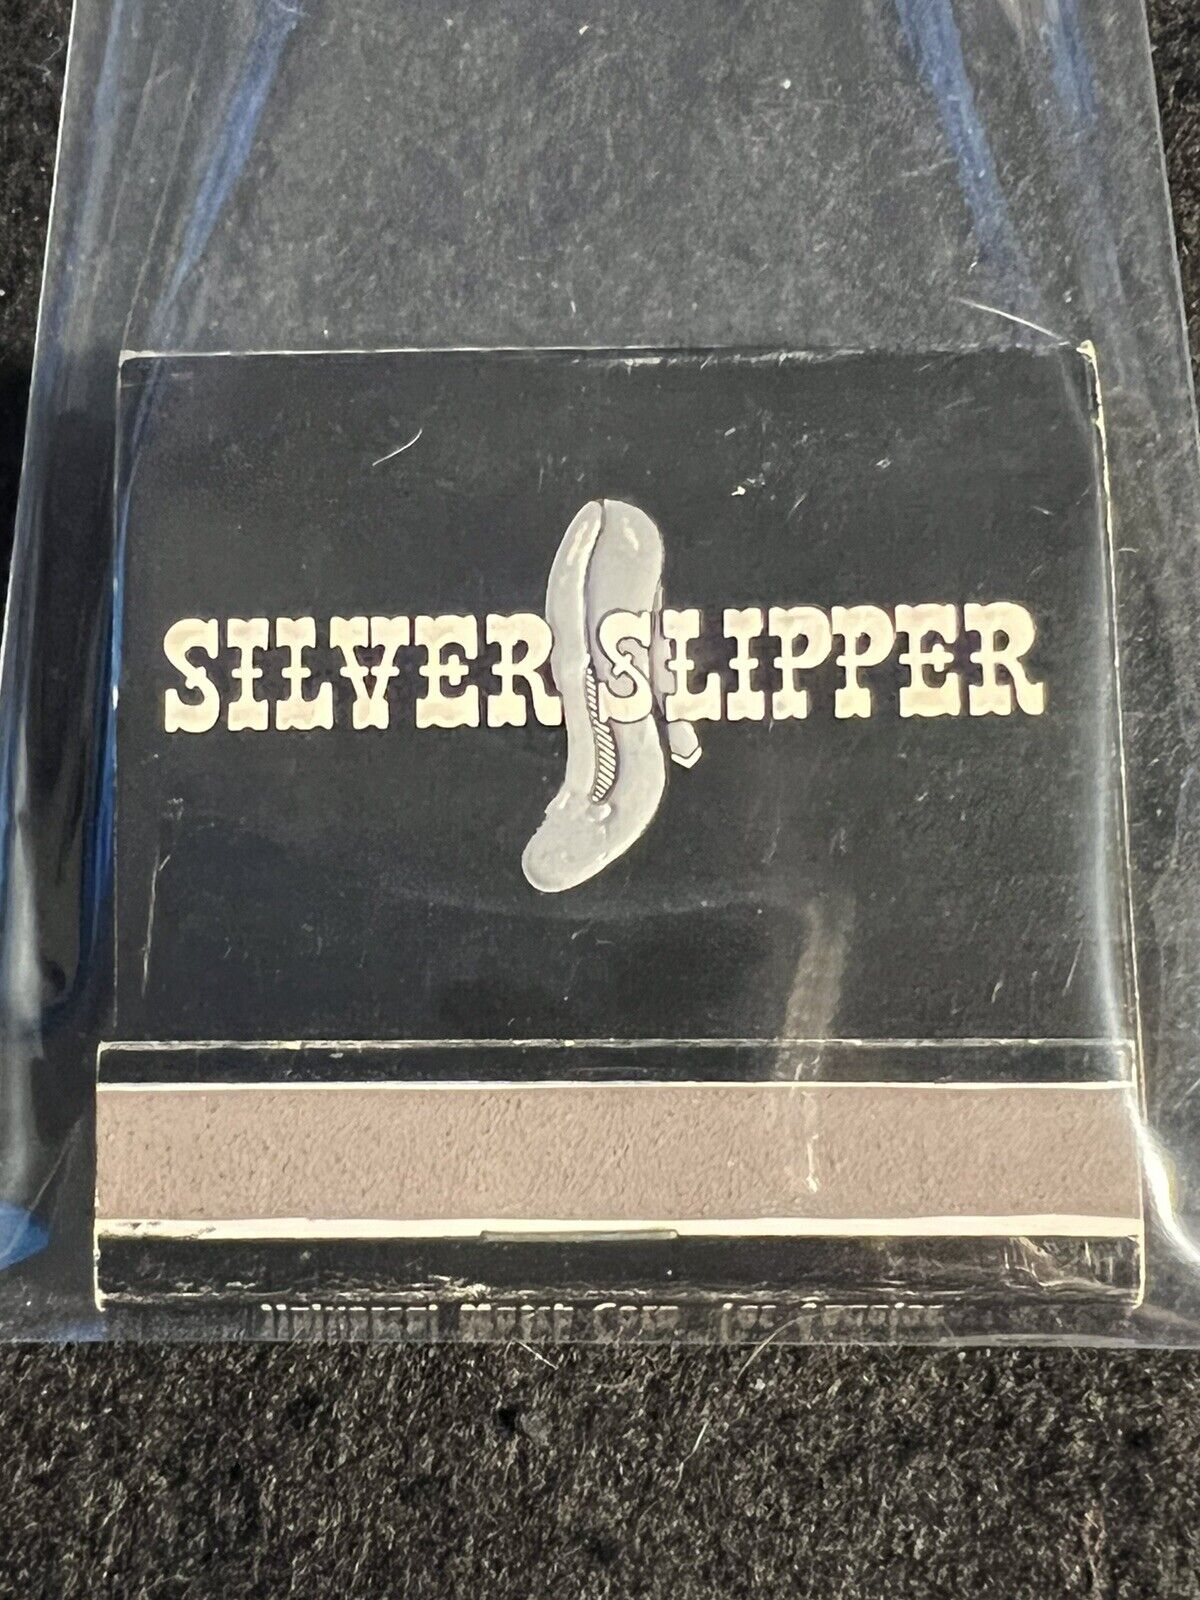 Vintage Matchbook - Silver Slipper Gambling Hall & Casino -  Unstruck Beauty!